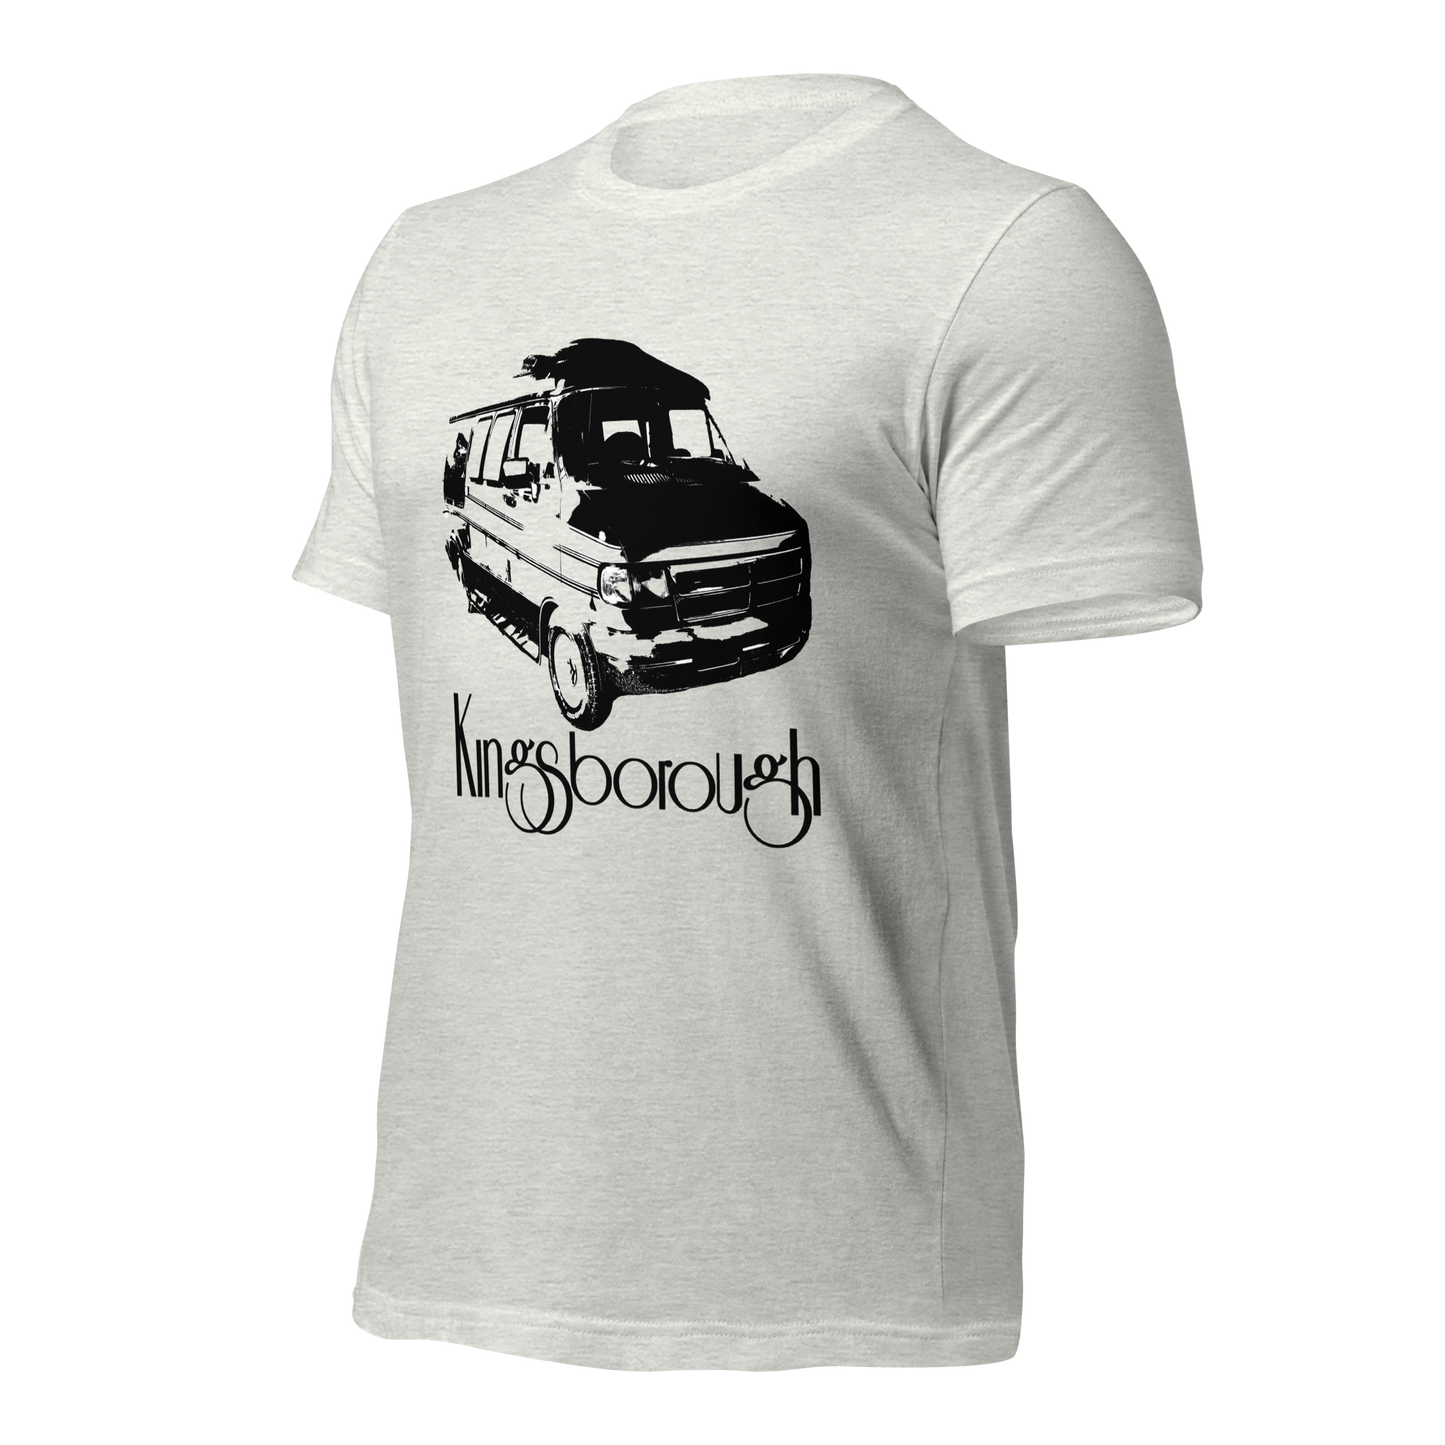 Kingsborough Van Unisex t-shirt (White/Ash)